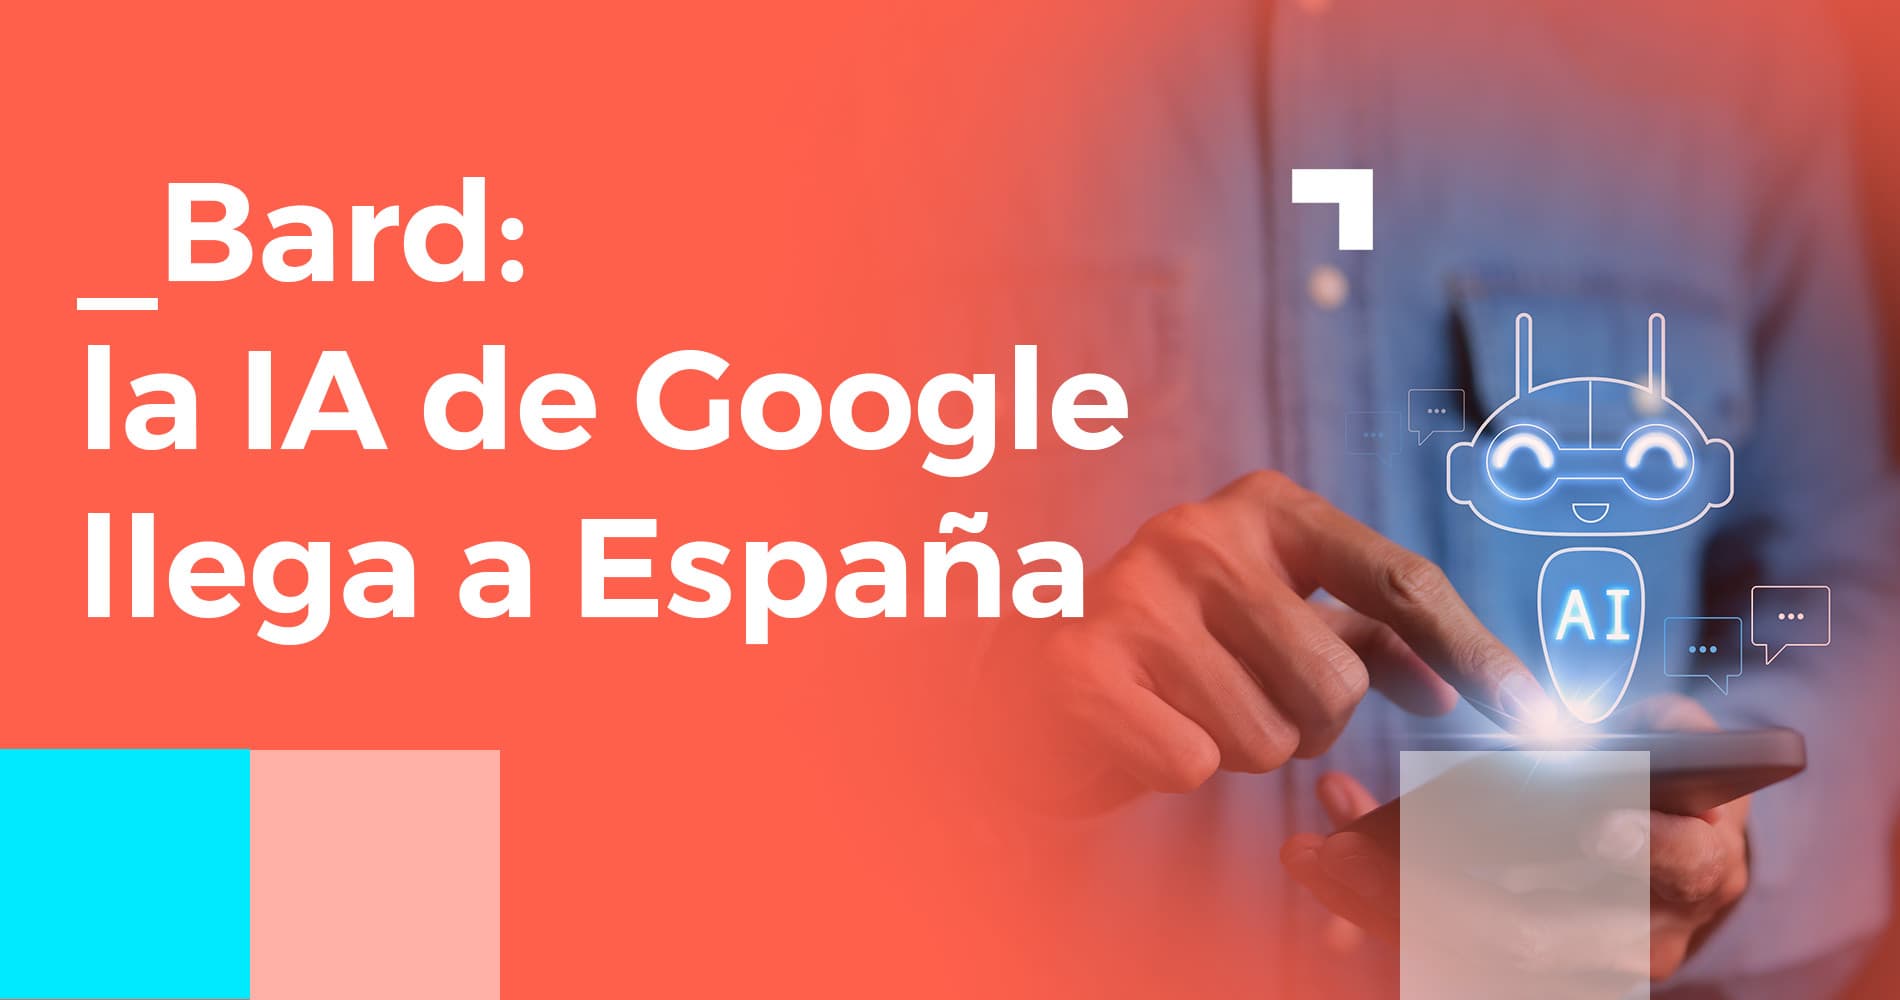 Bard, el chatbot de Google con IA, llega a España